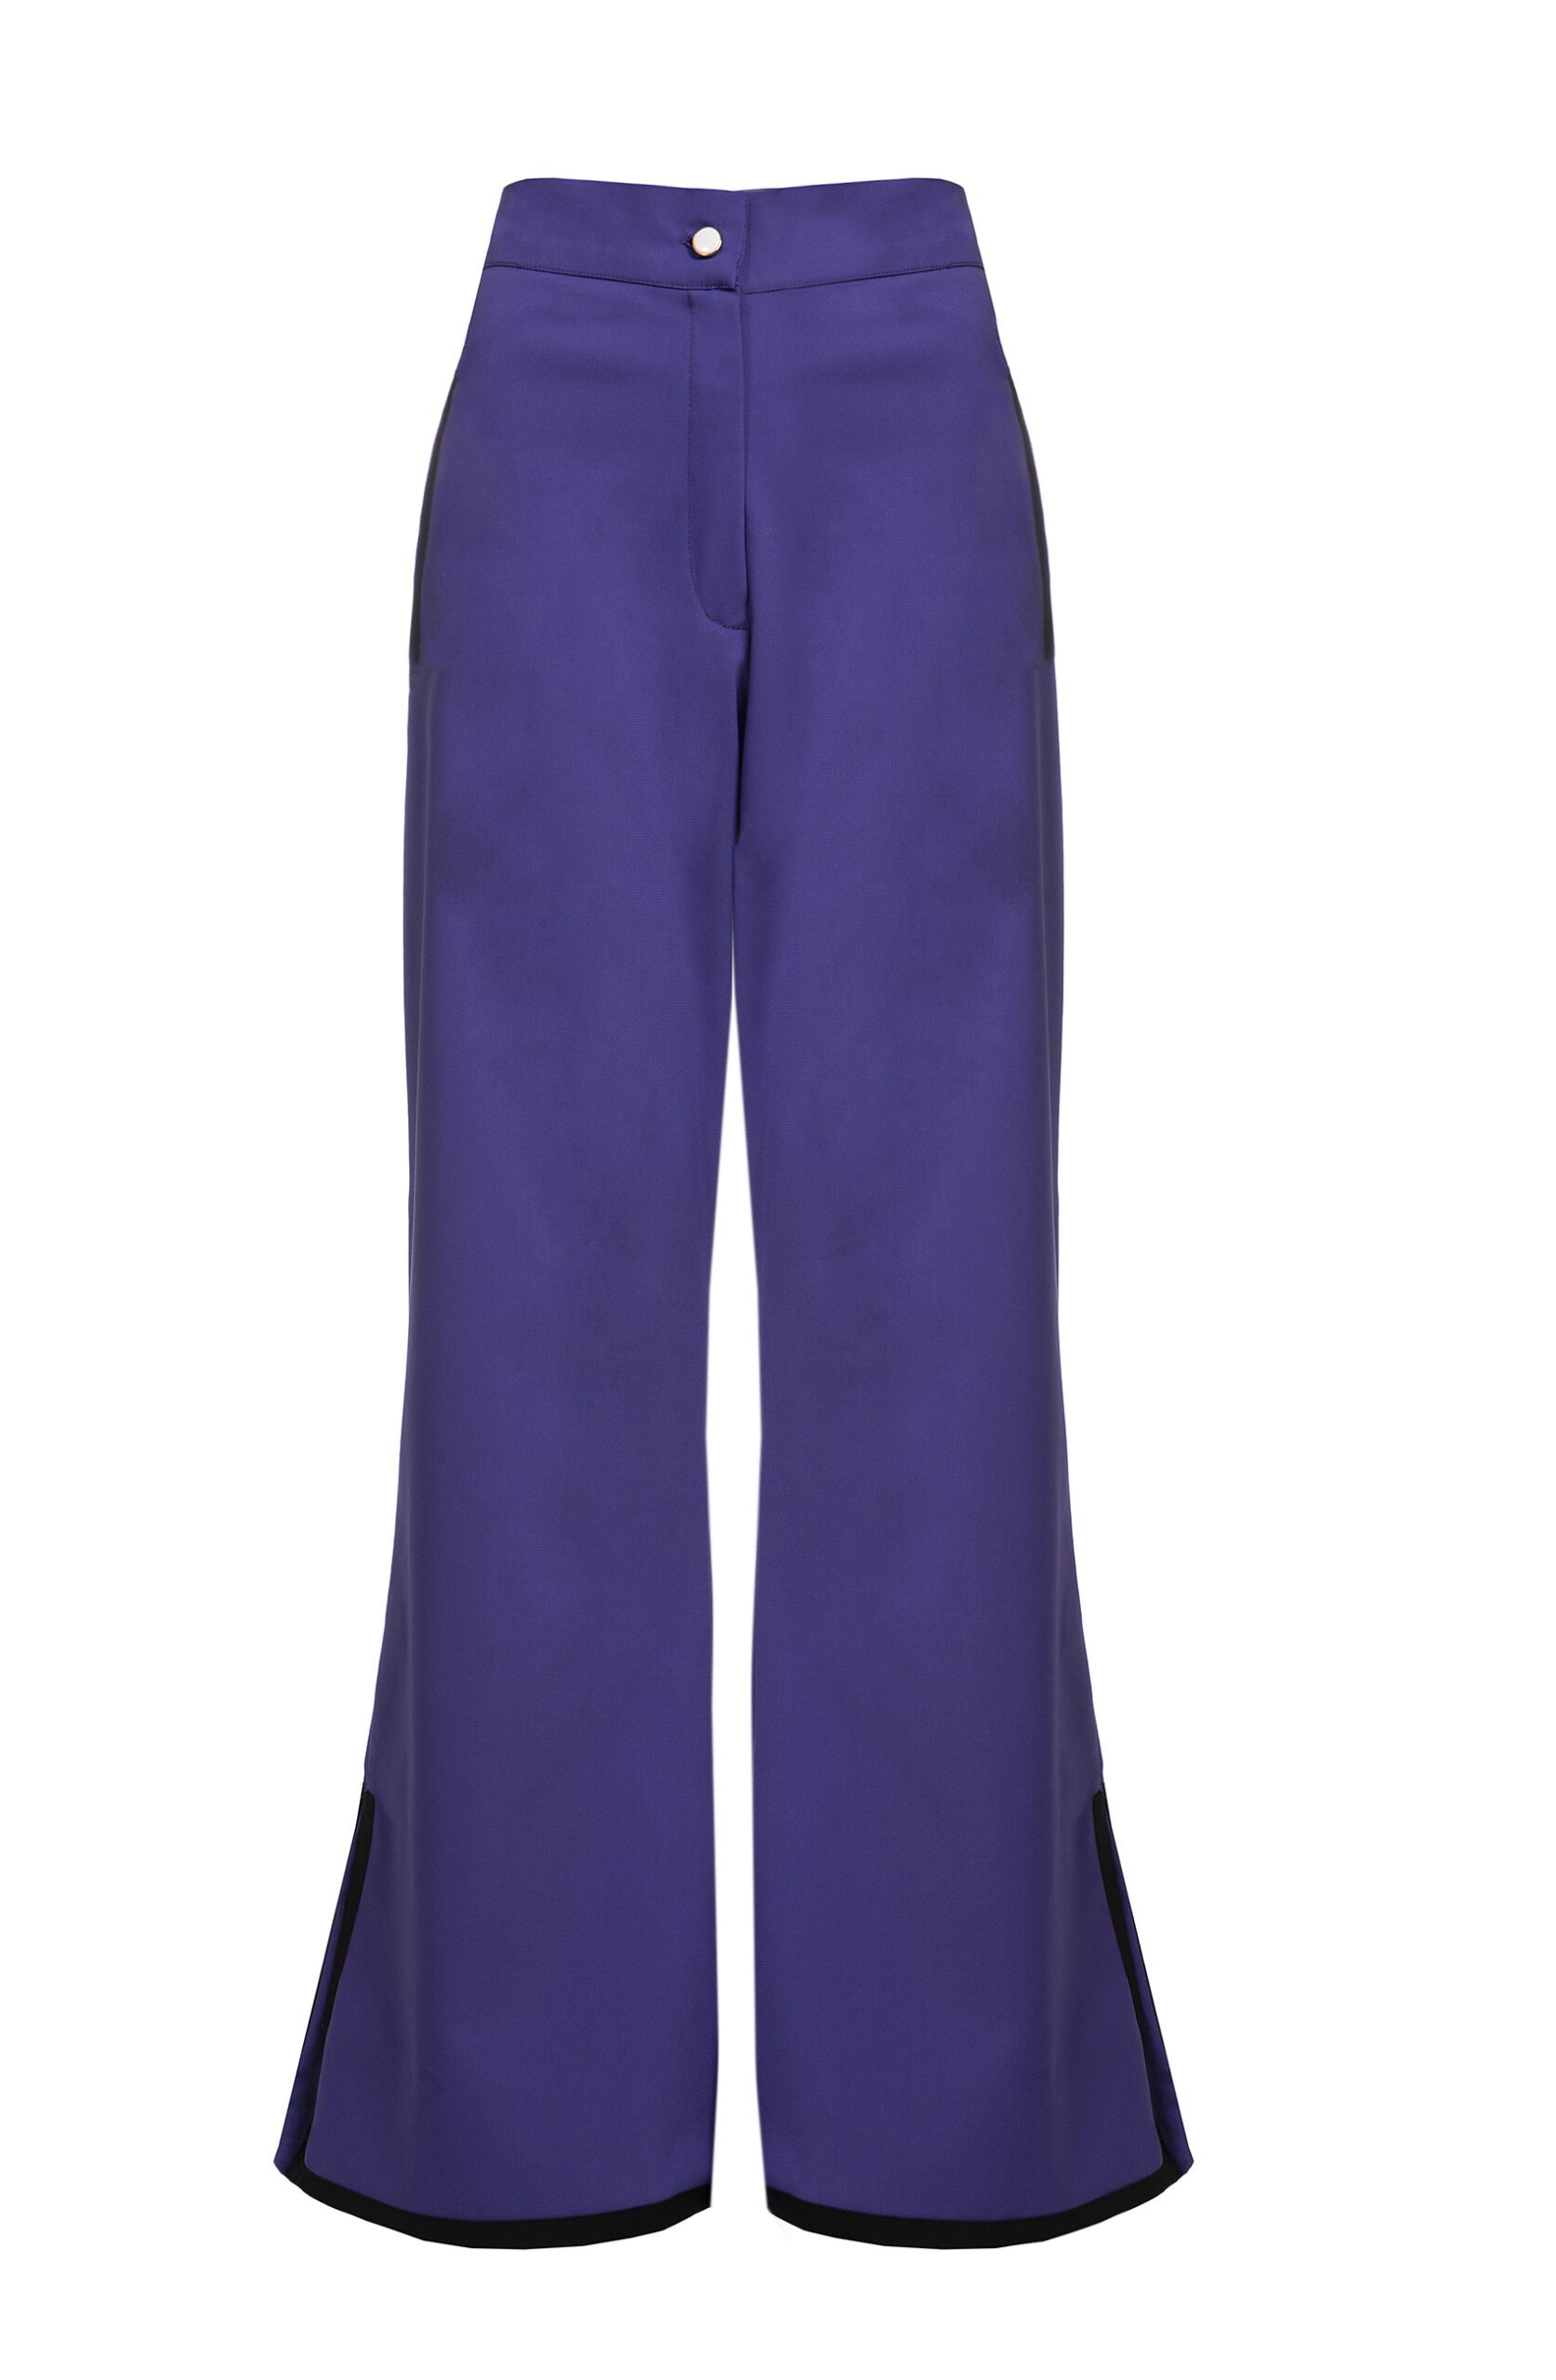 la-chaine-paloma-pants-purple-true-grace.jpg